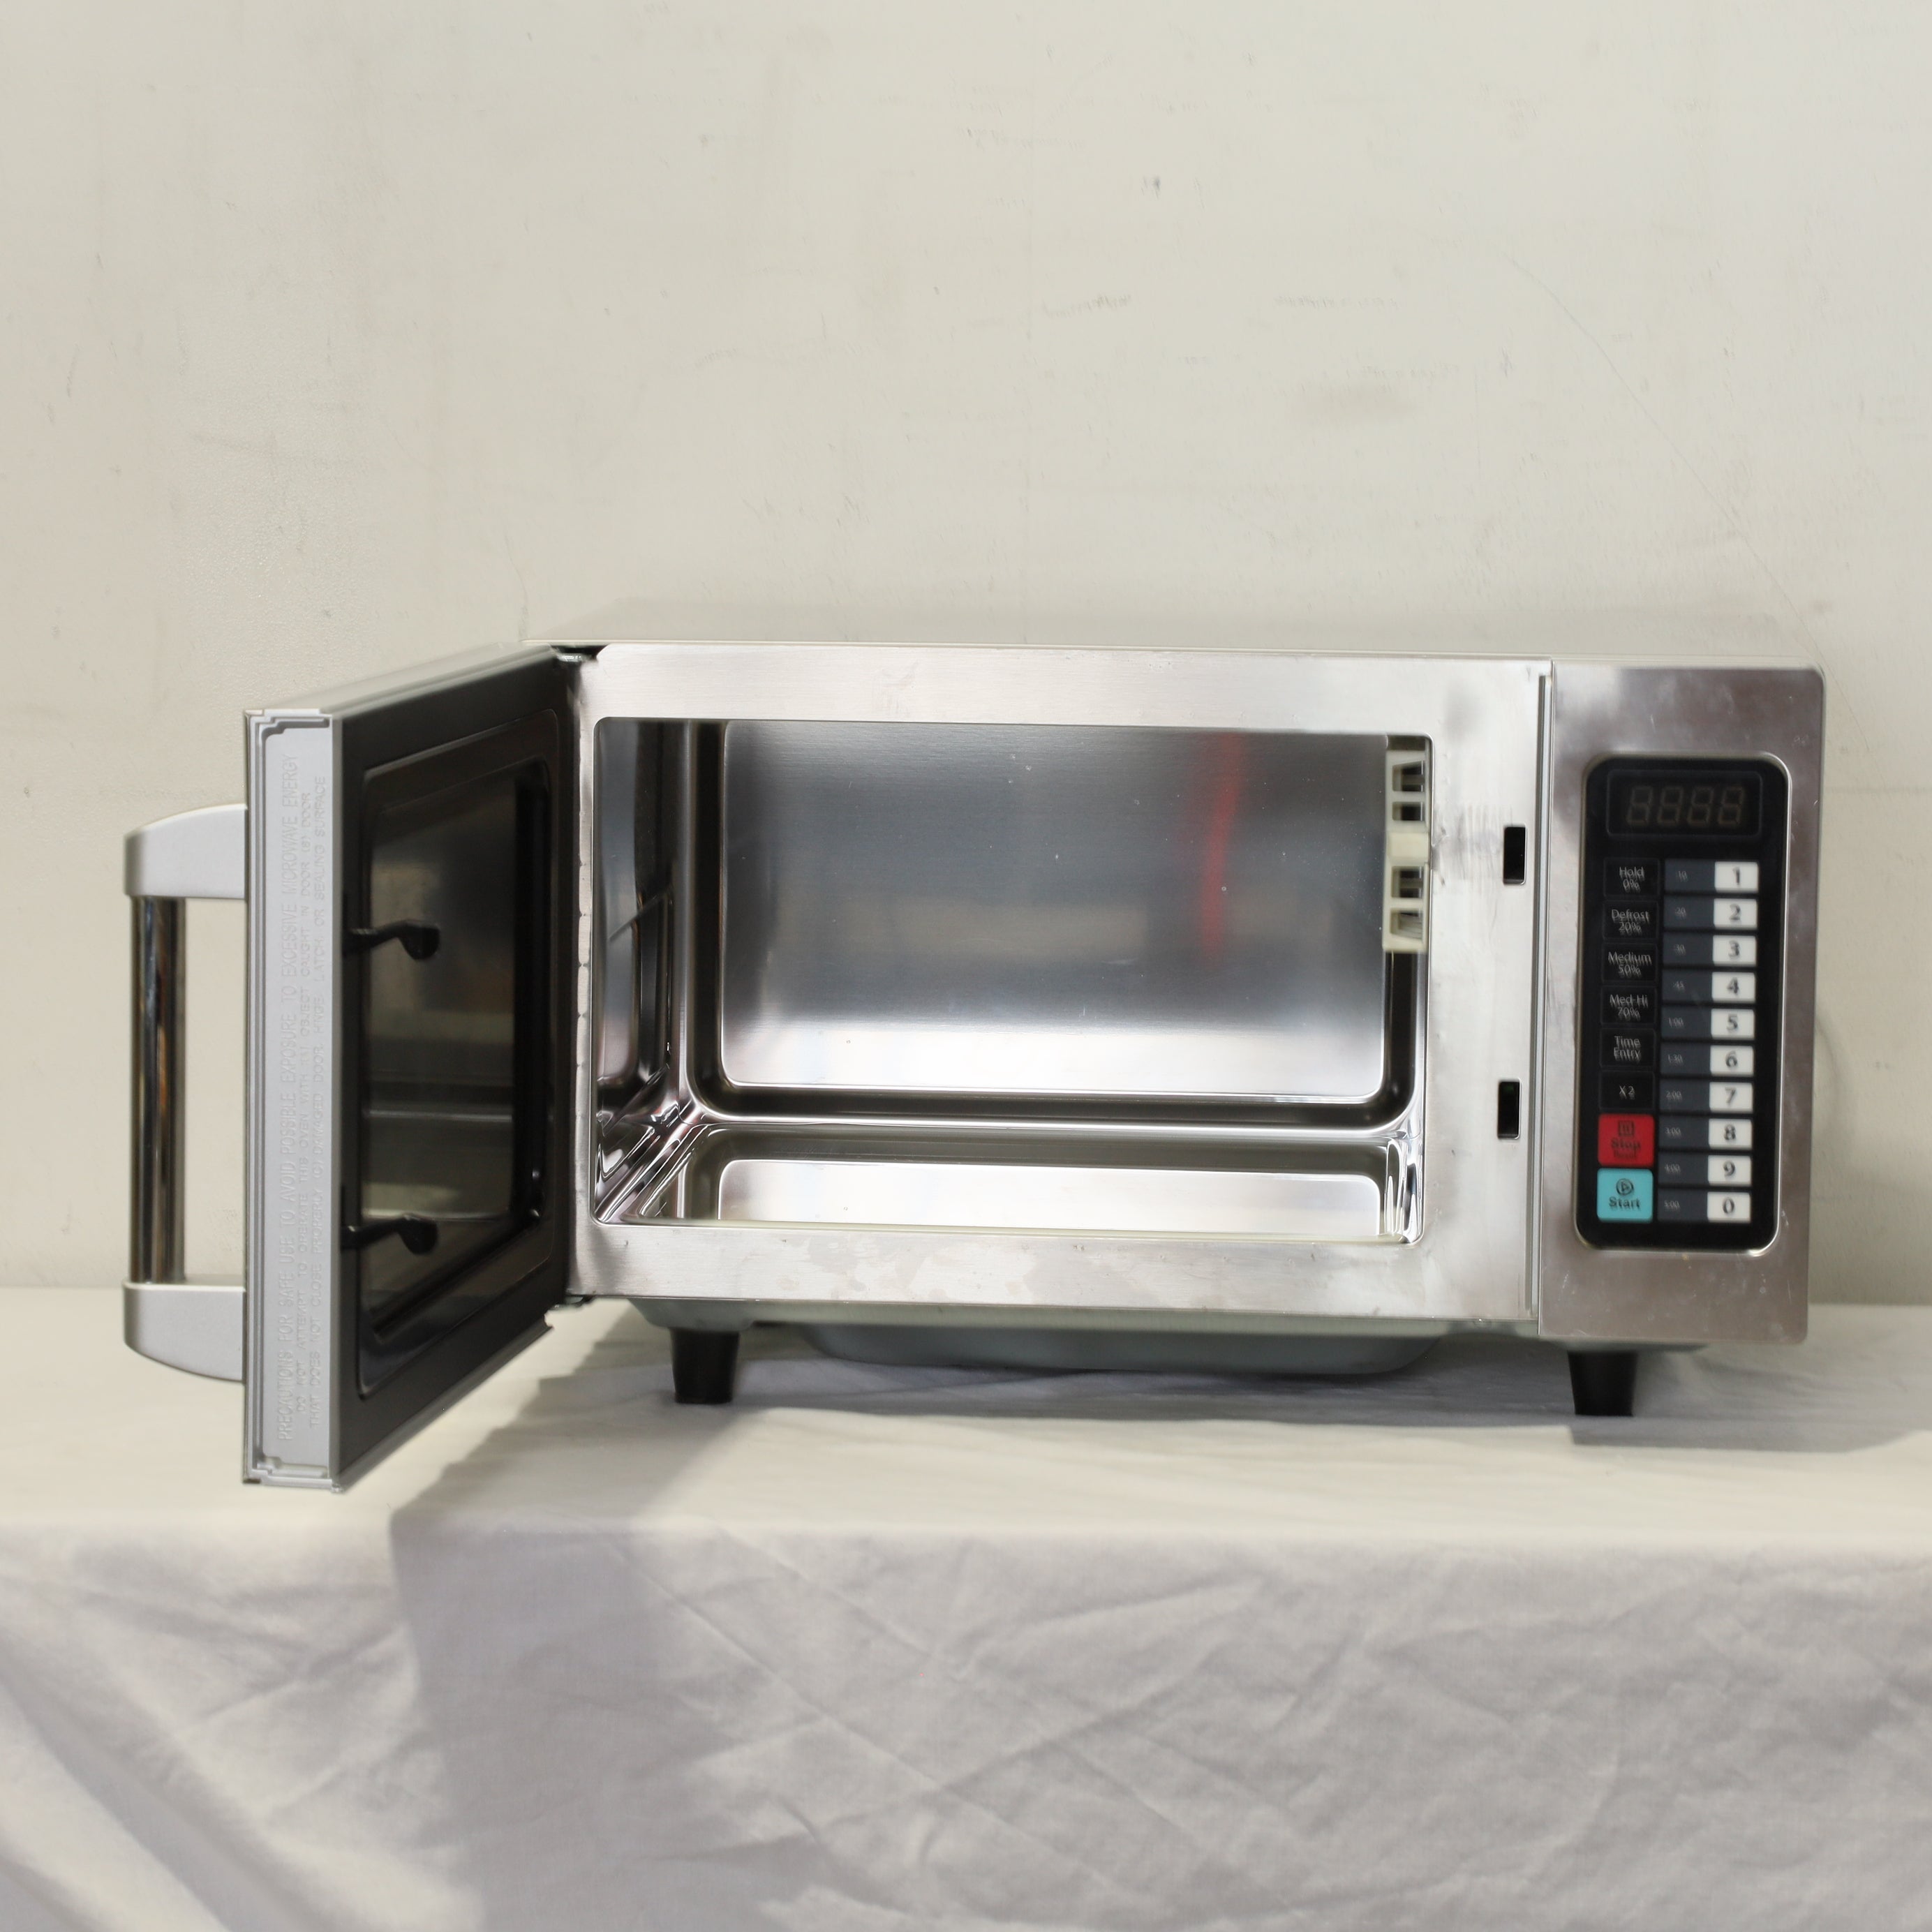 Thumbnail - Benchstar MD-1000L Microwave